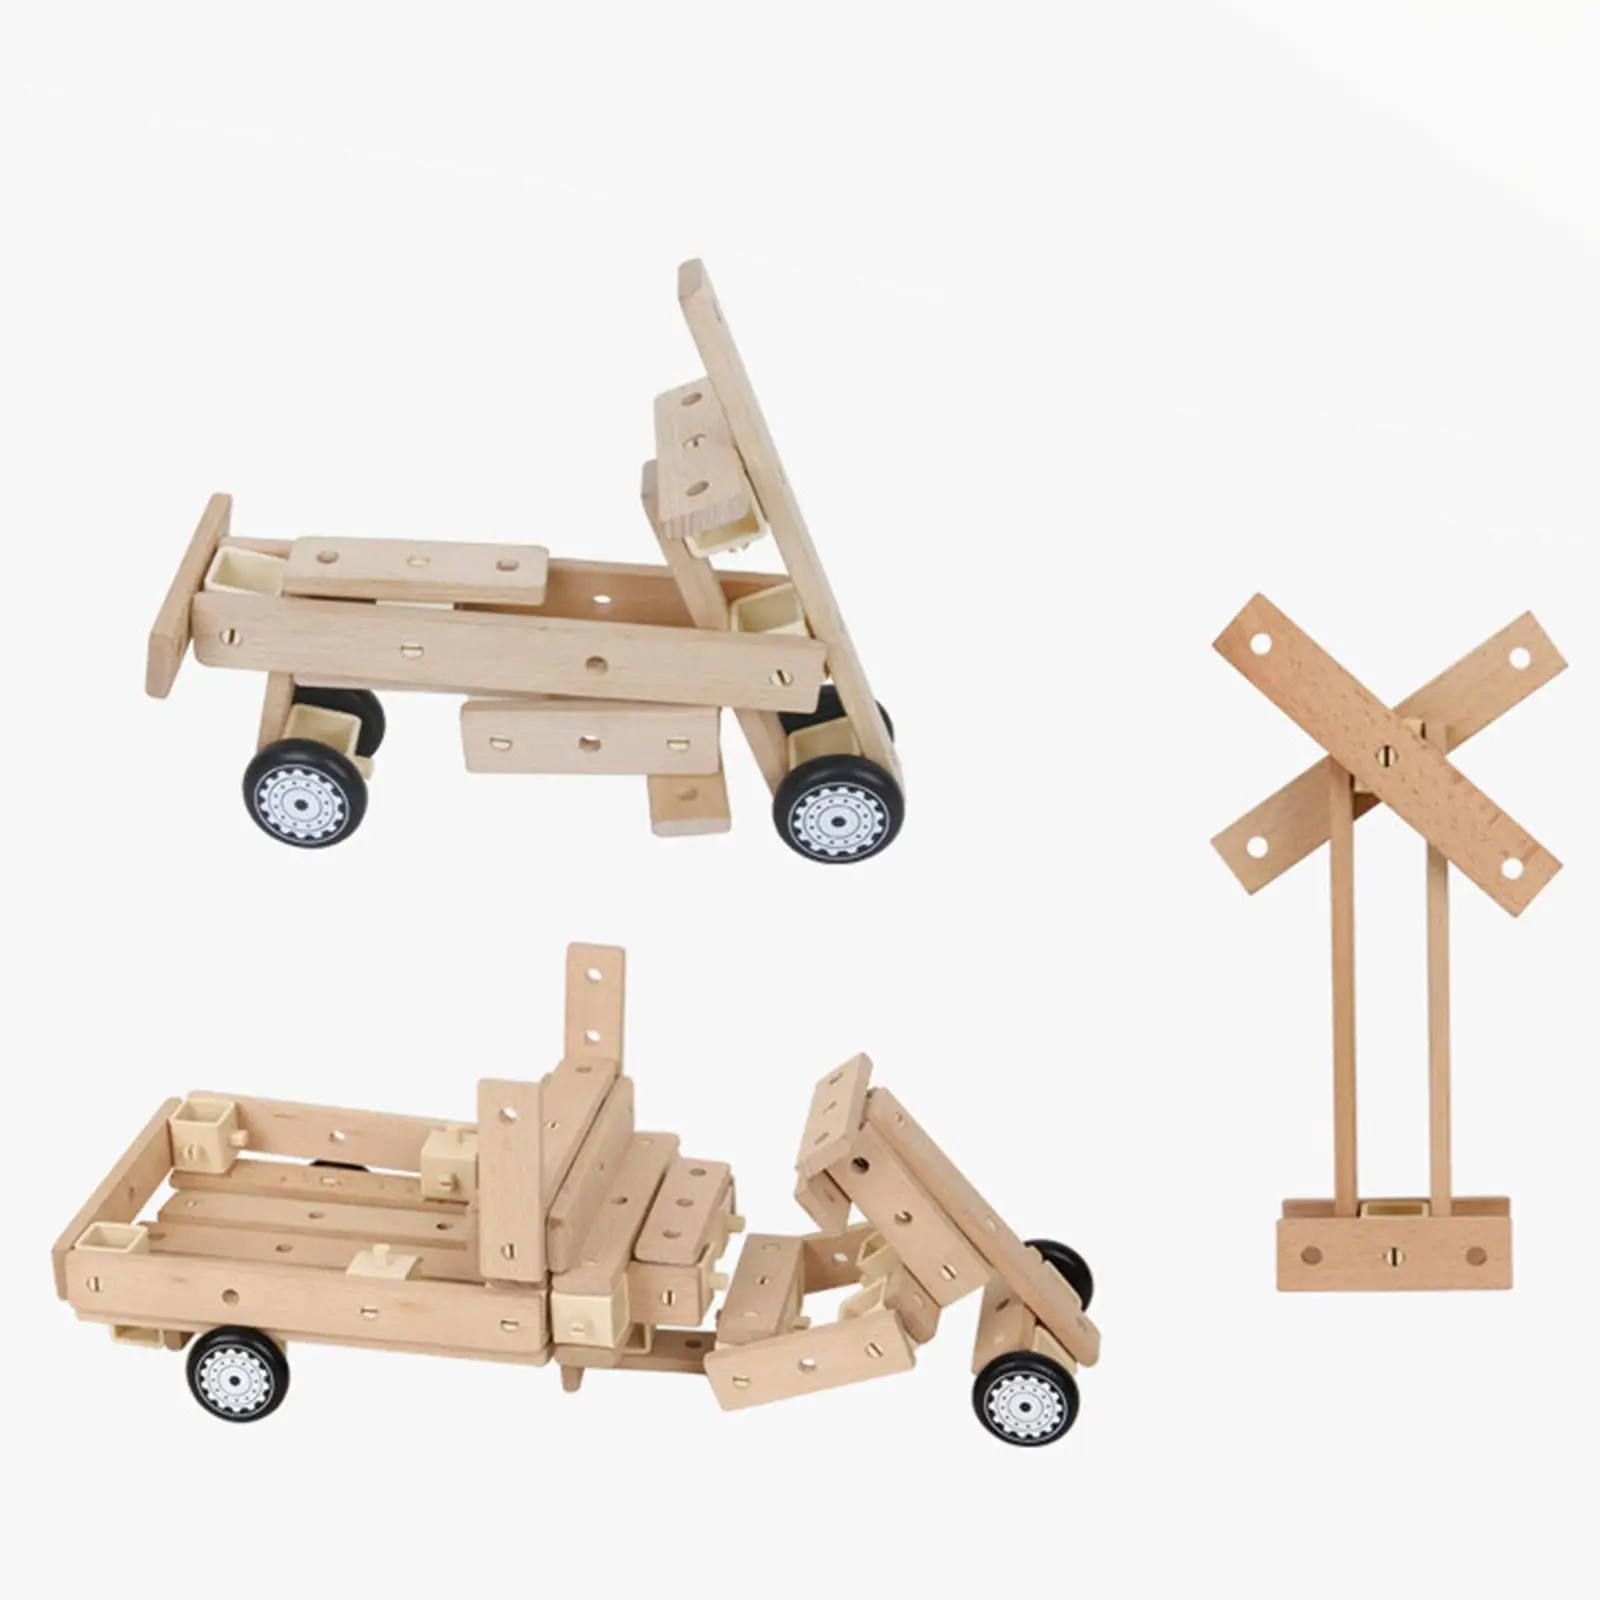 Wooden Building Blocks Set Wood Planks Set Construction Toys Screws Nuts DIY Wooden Building Kit for Preschool Kindergarten Kids